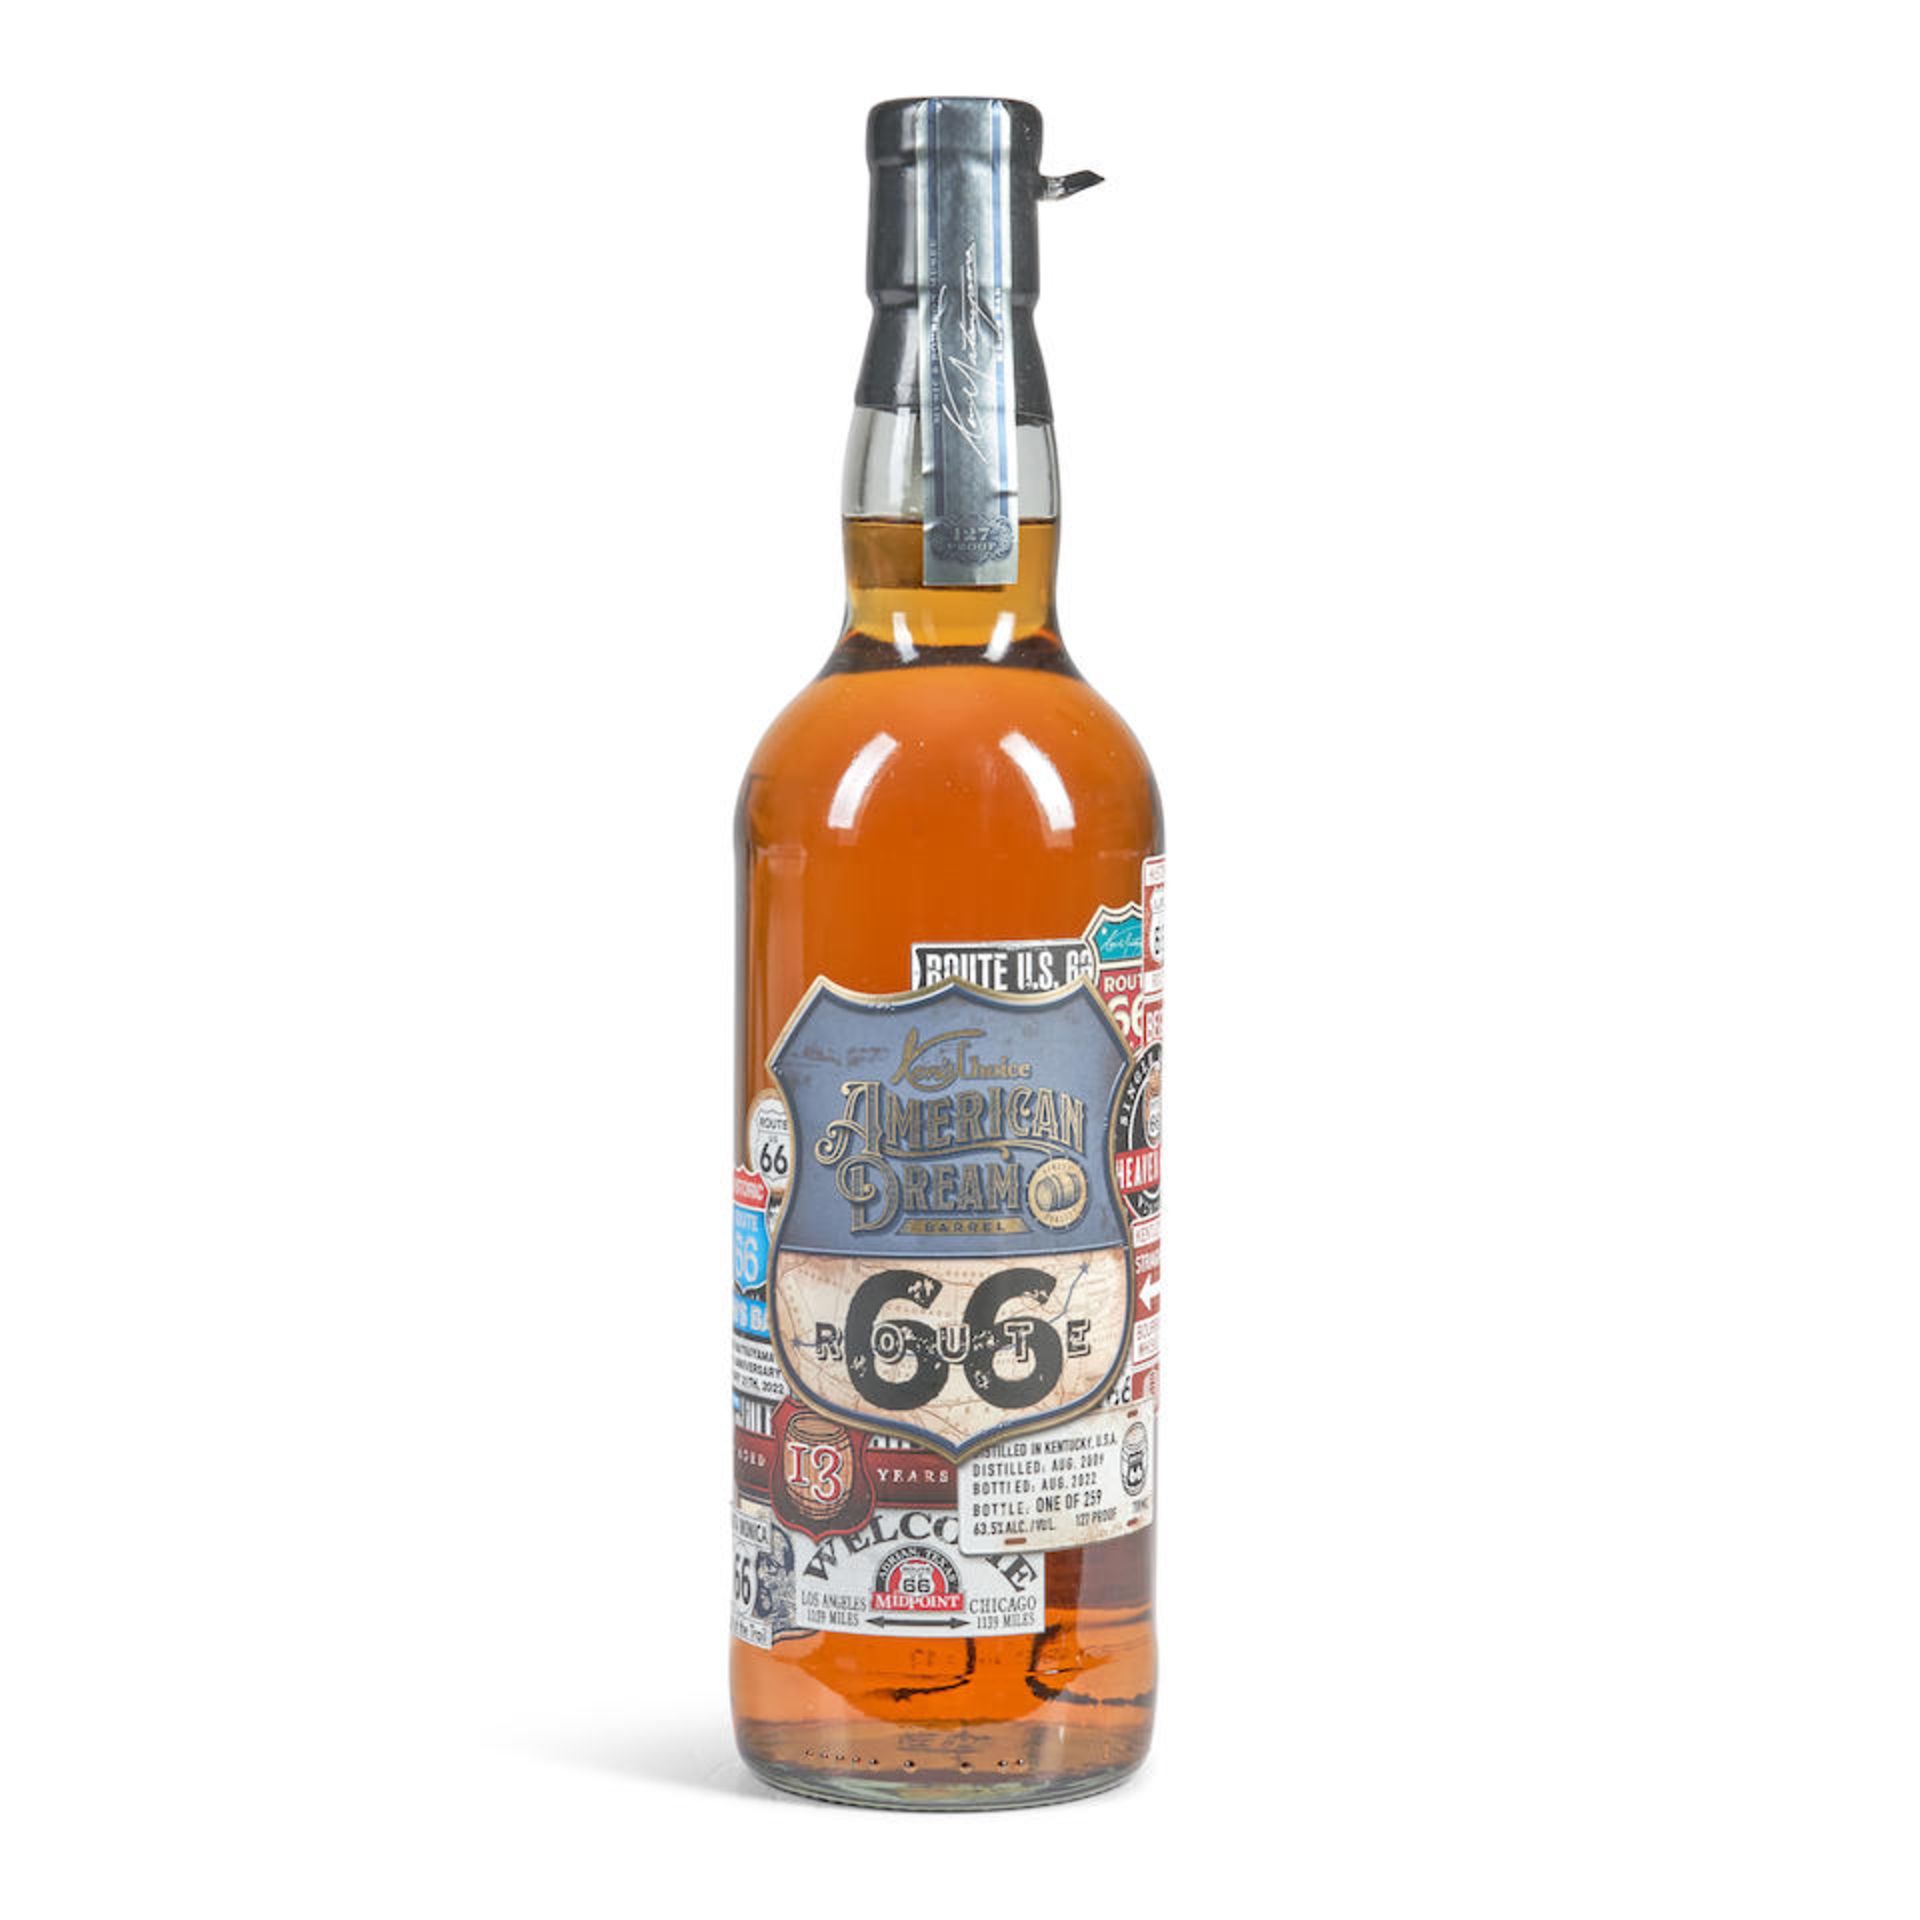 Ken's Choice 13 Years Old Bourbon 'Route 66' (Heaven Hill, 1 750ml bottle)